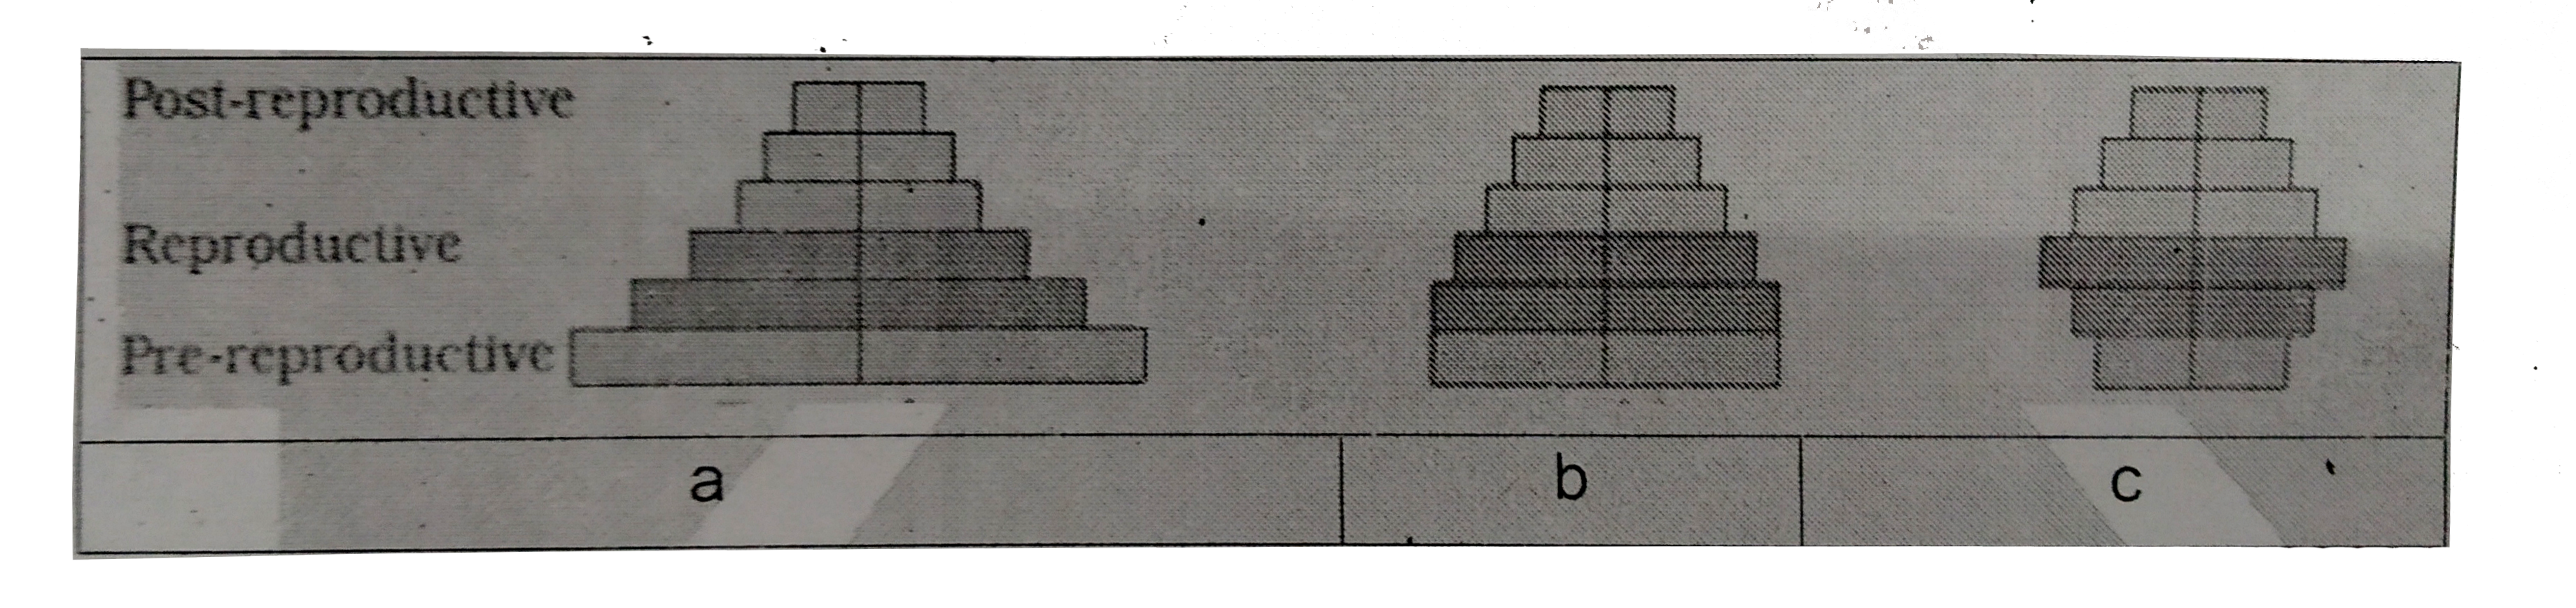 Select the correct option w.r.t. Age pyramids.